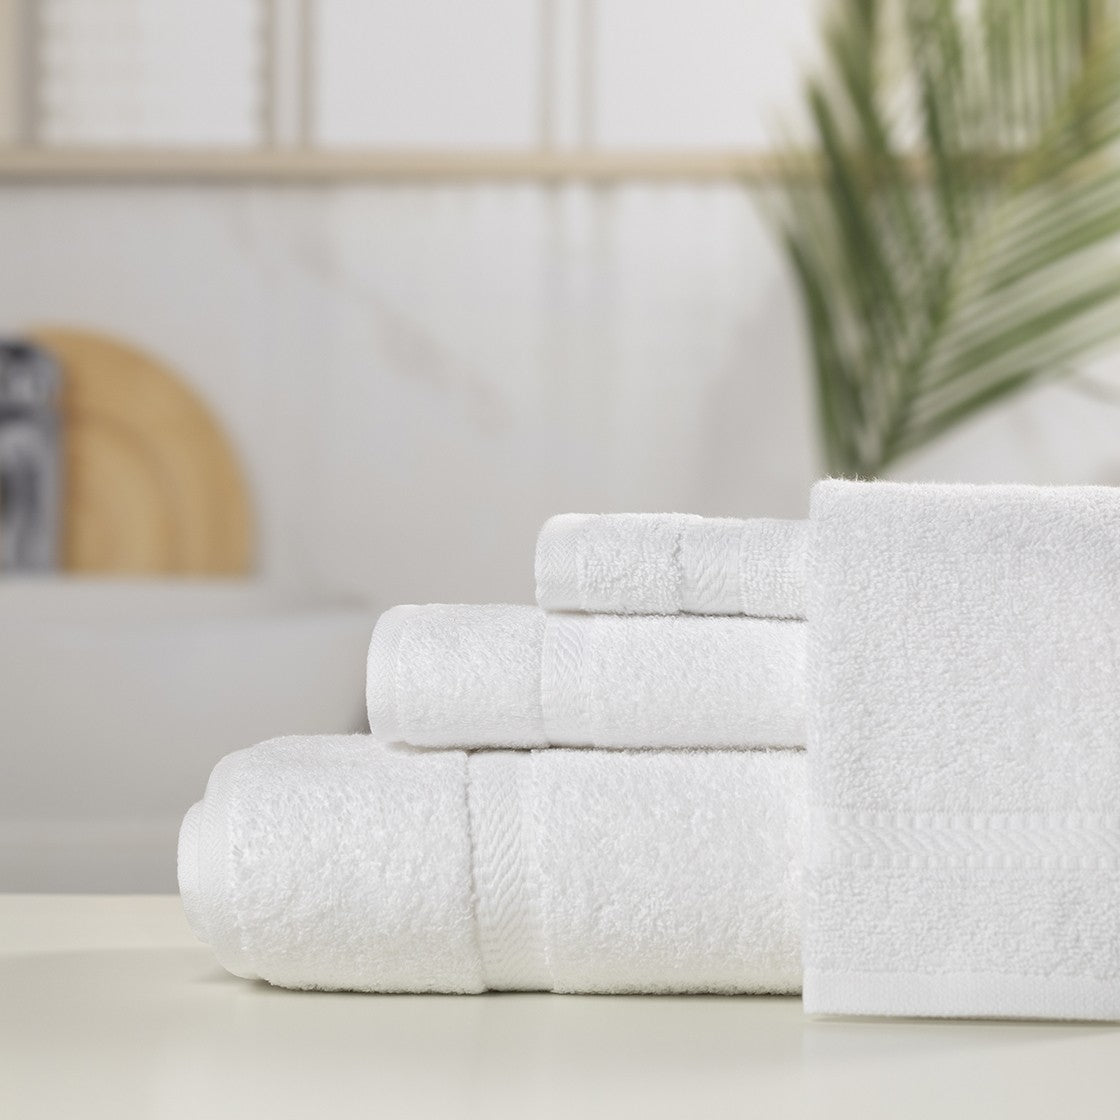 2-Piece Hotel Quality Bath Towels from Sobel Westex